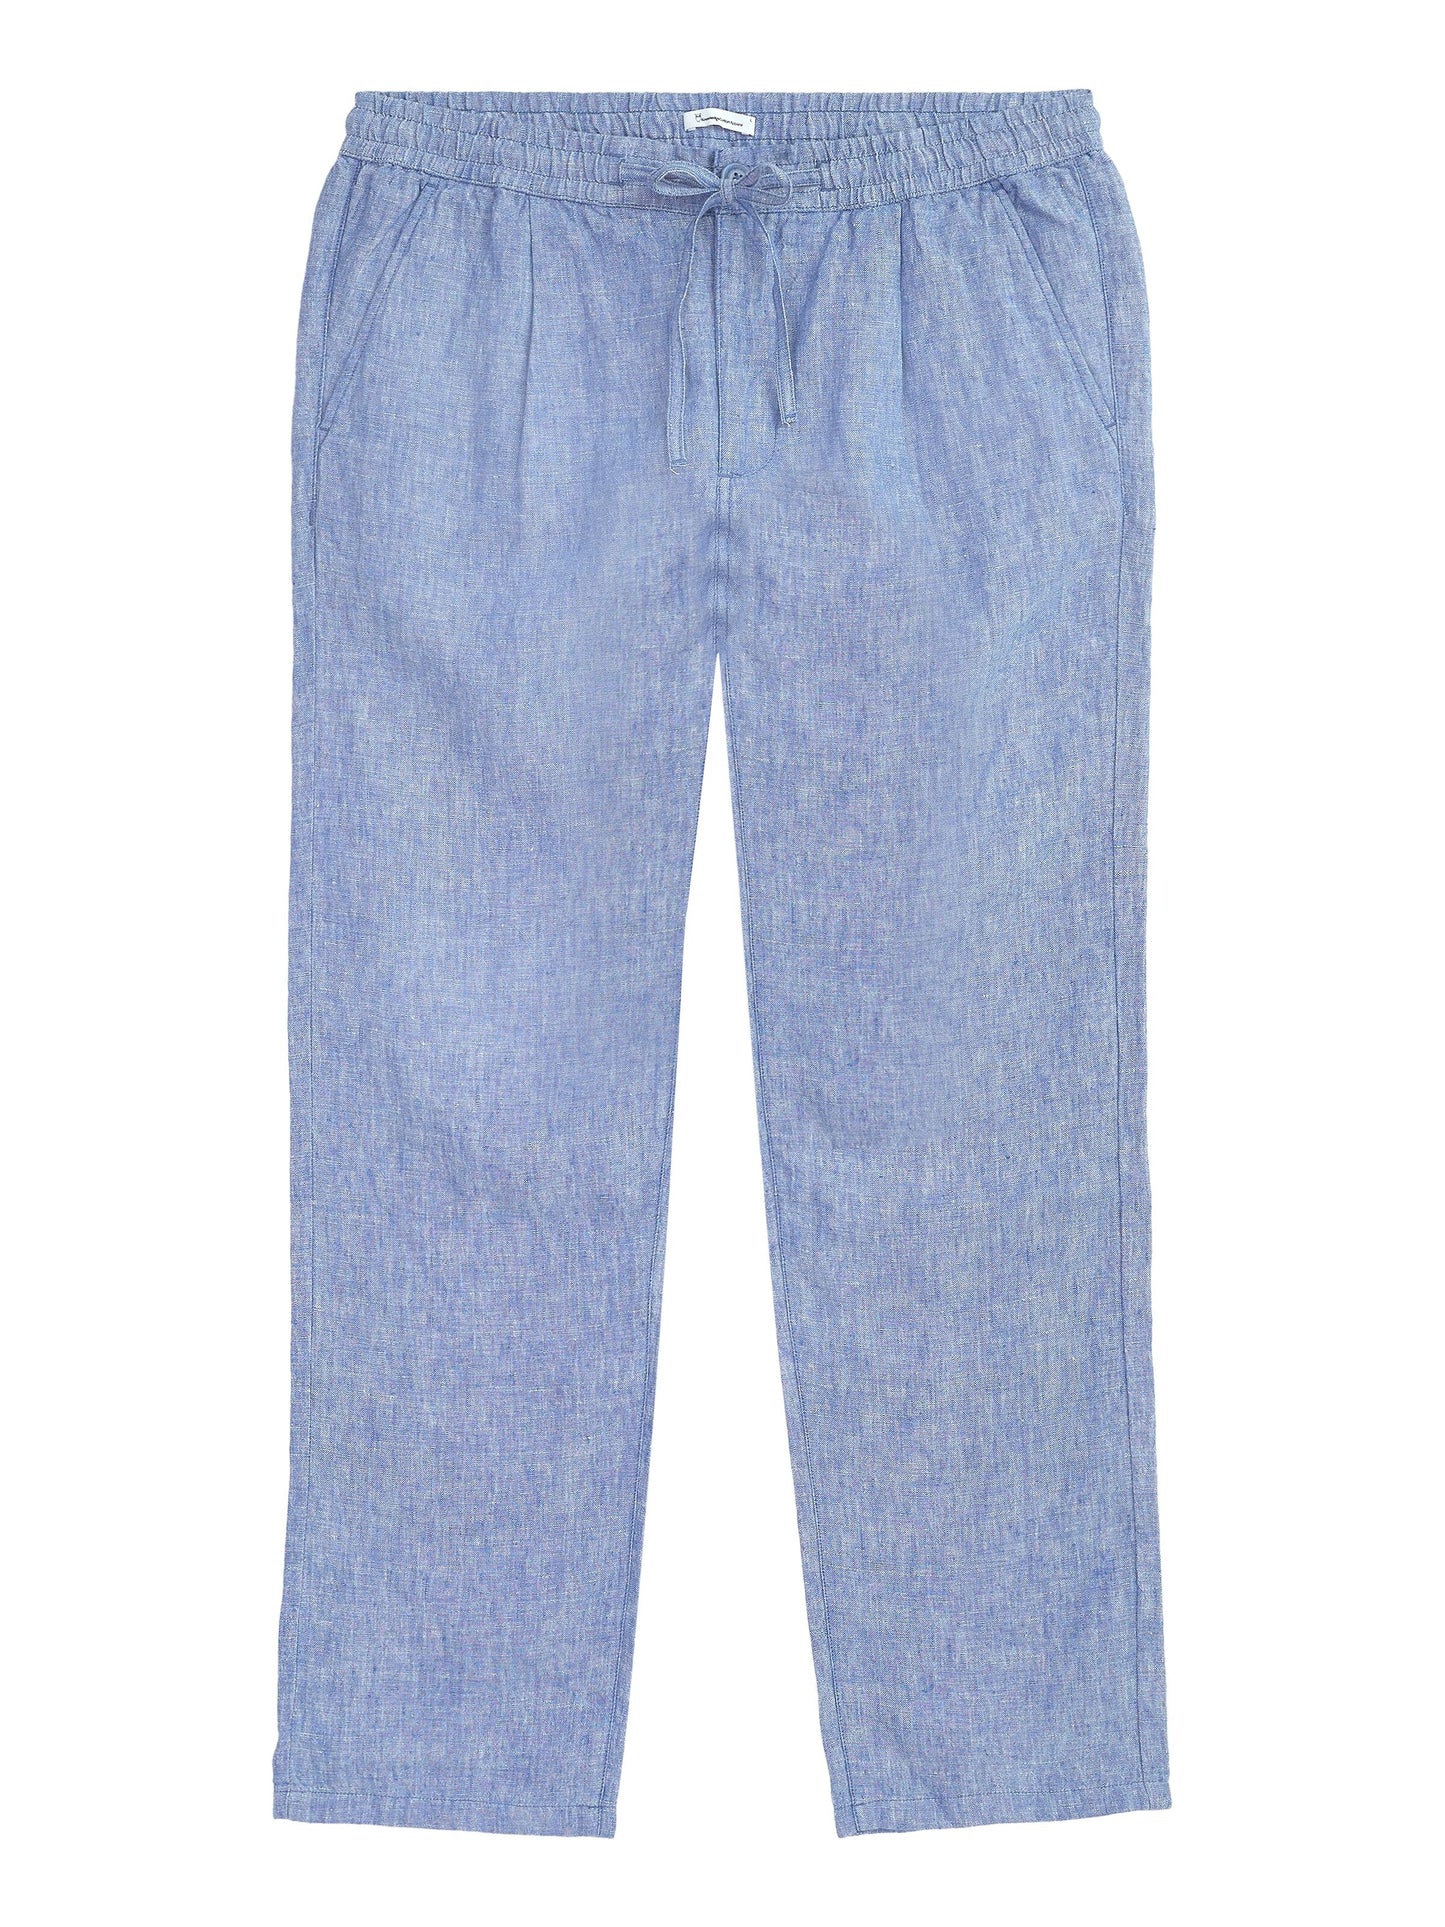 KCA - FIG loose linen pants Moonlight Blue